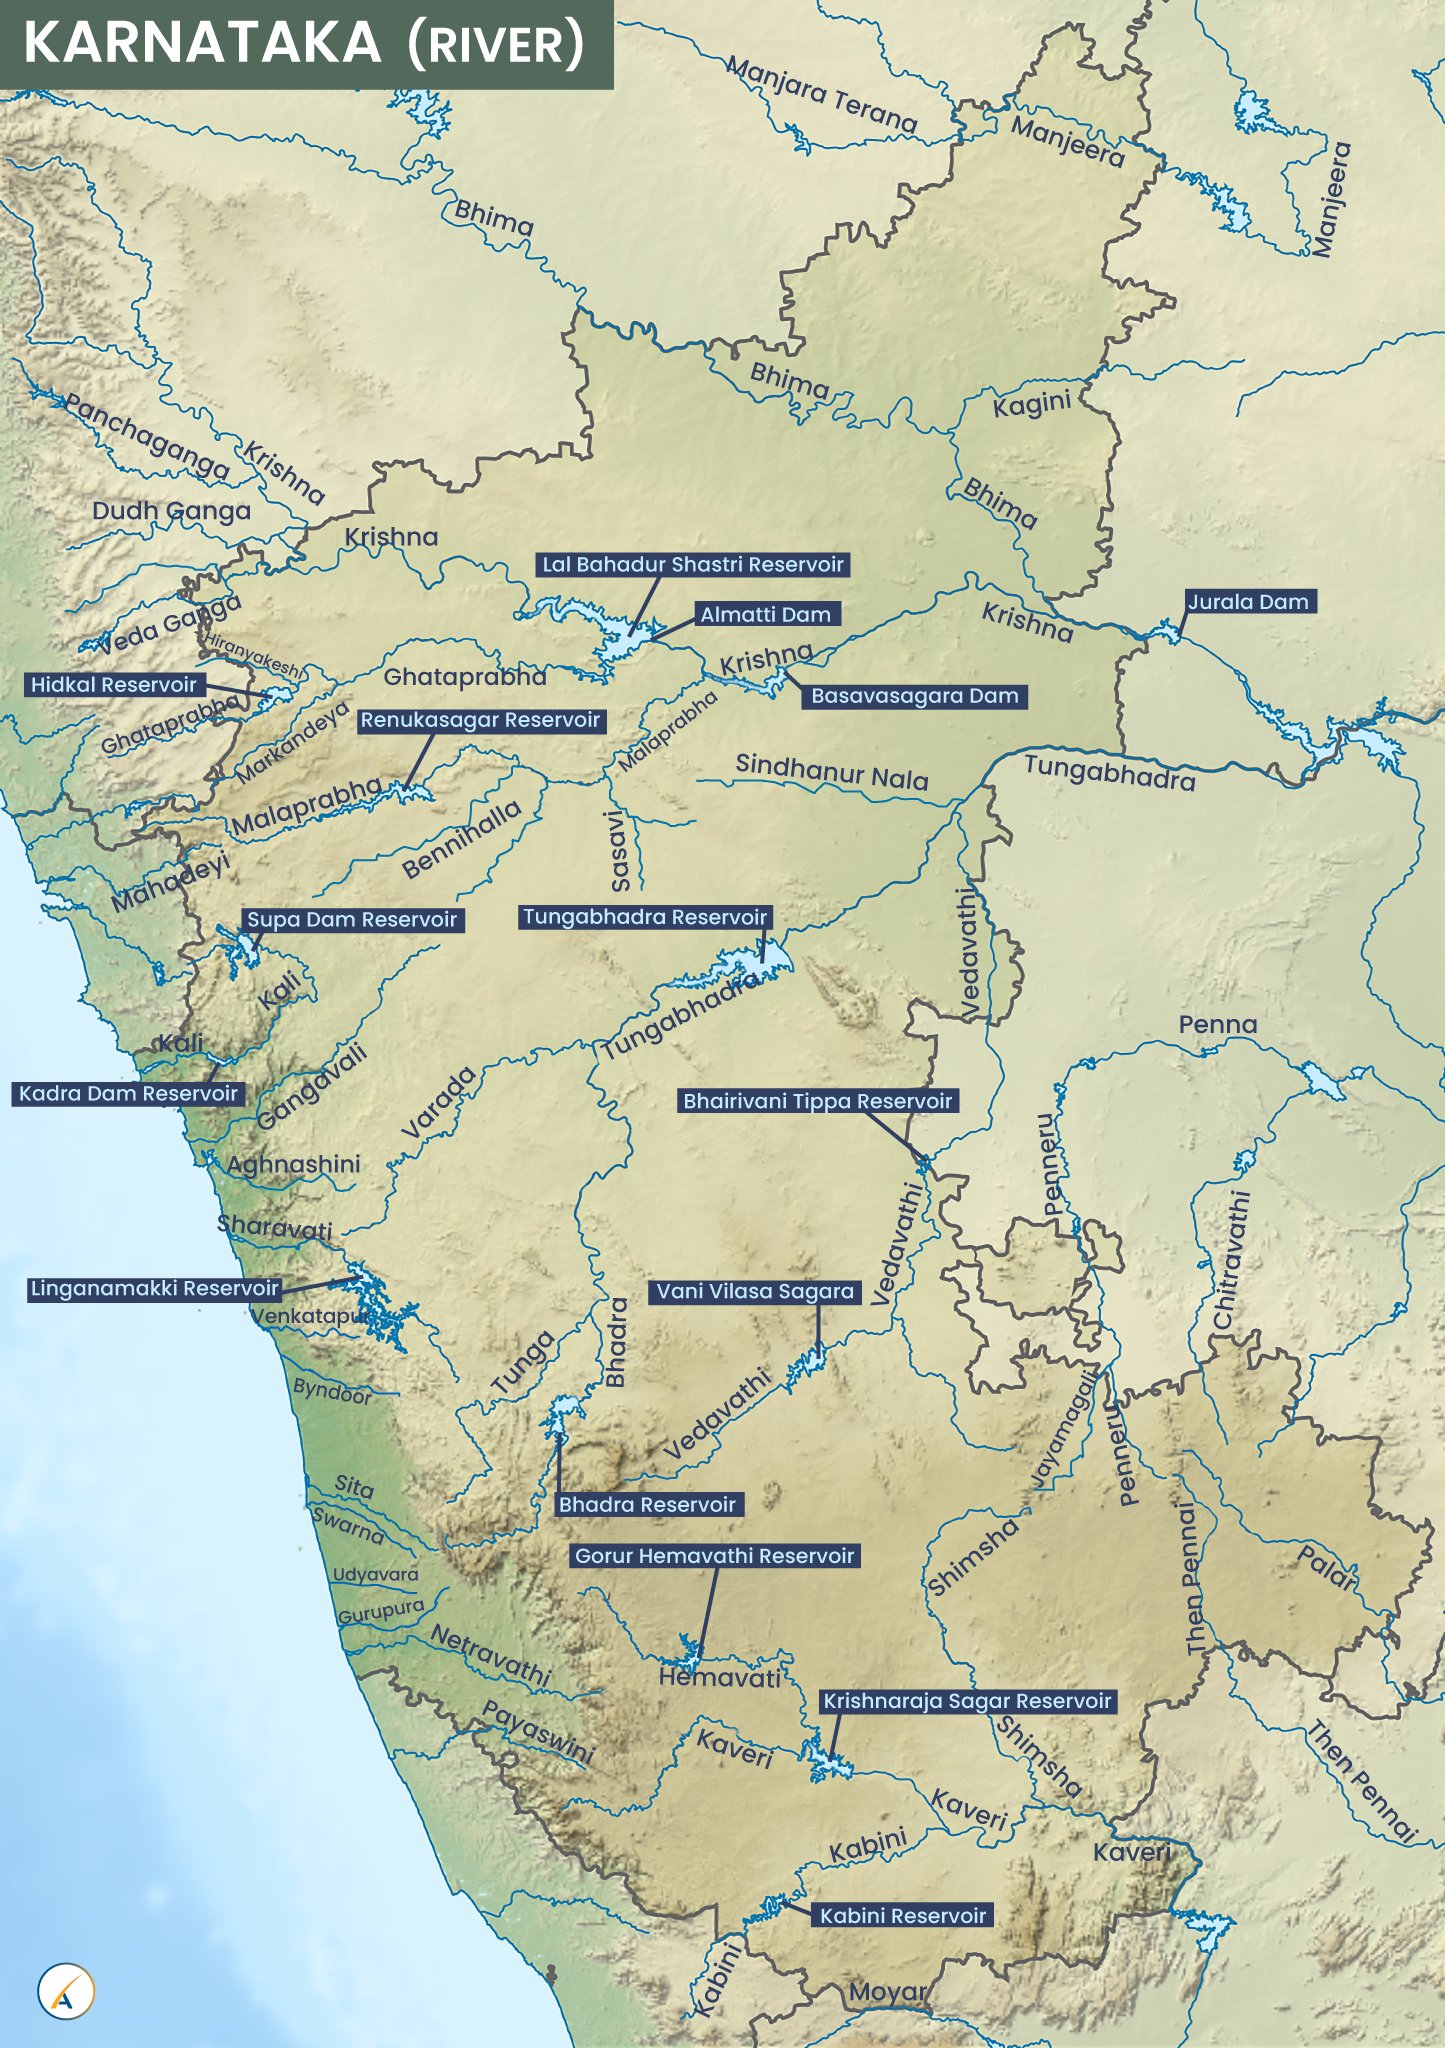 Karnataka River Map